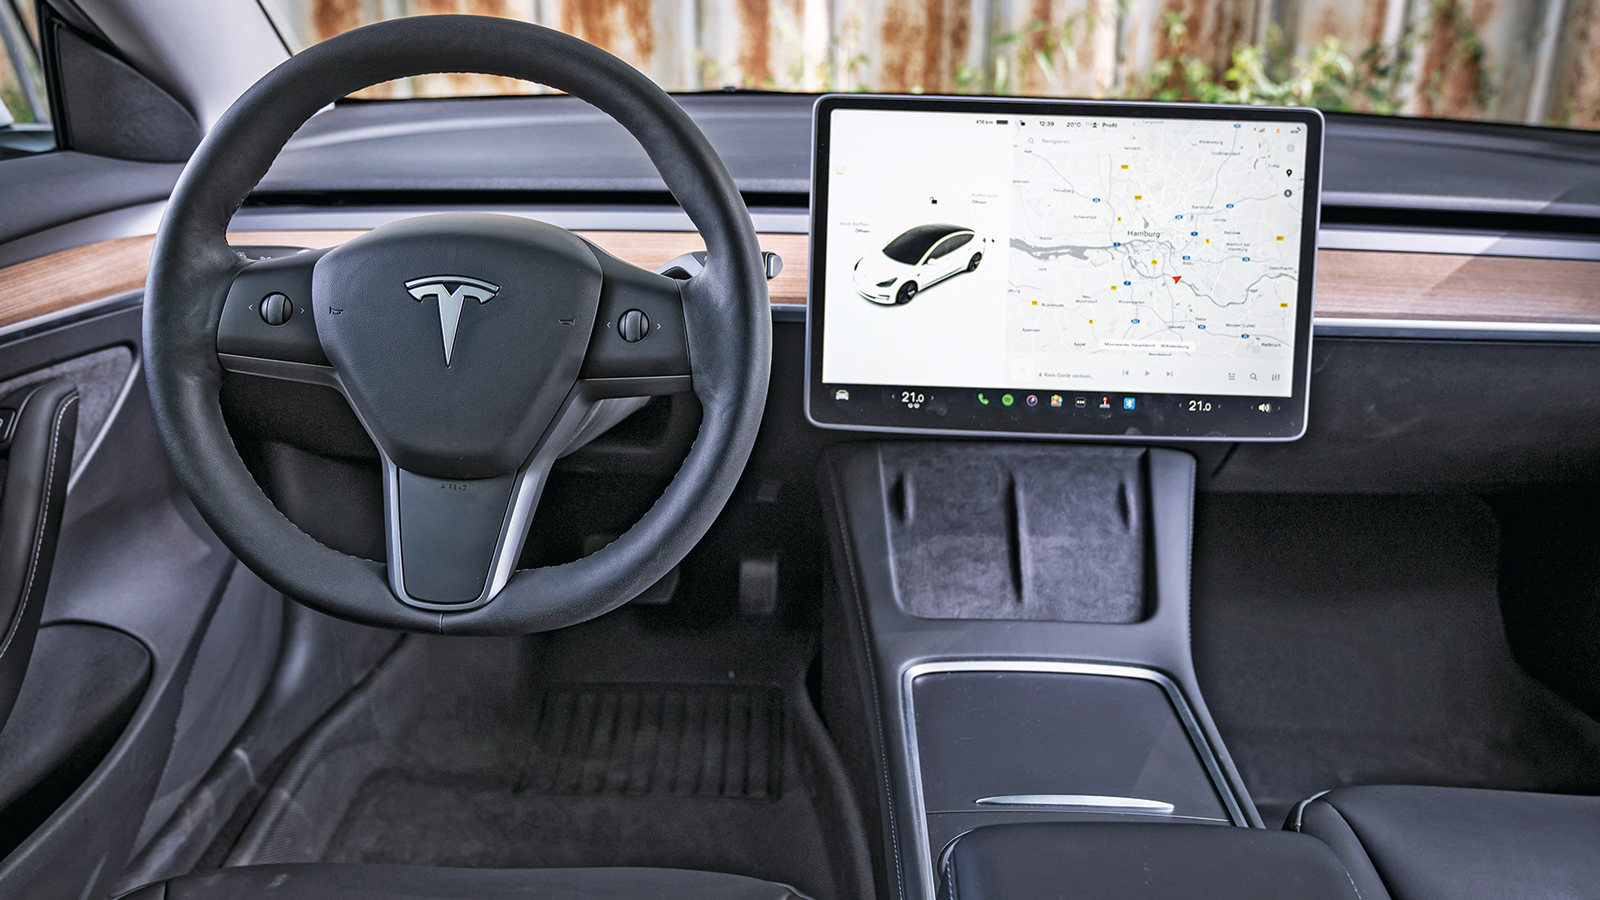 Tι προσφέρει ένα Tesla Model 3 εκτός της ηλεκτροκίνησης;